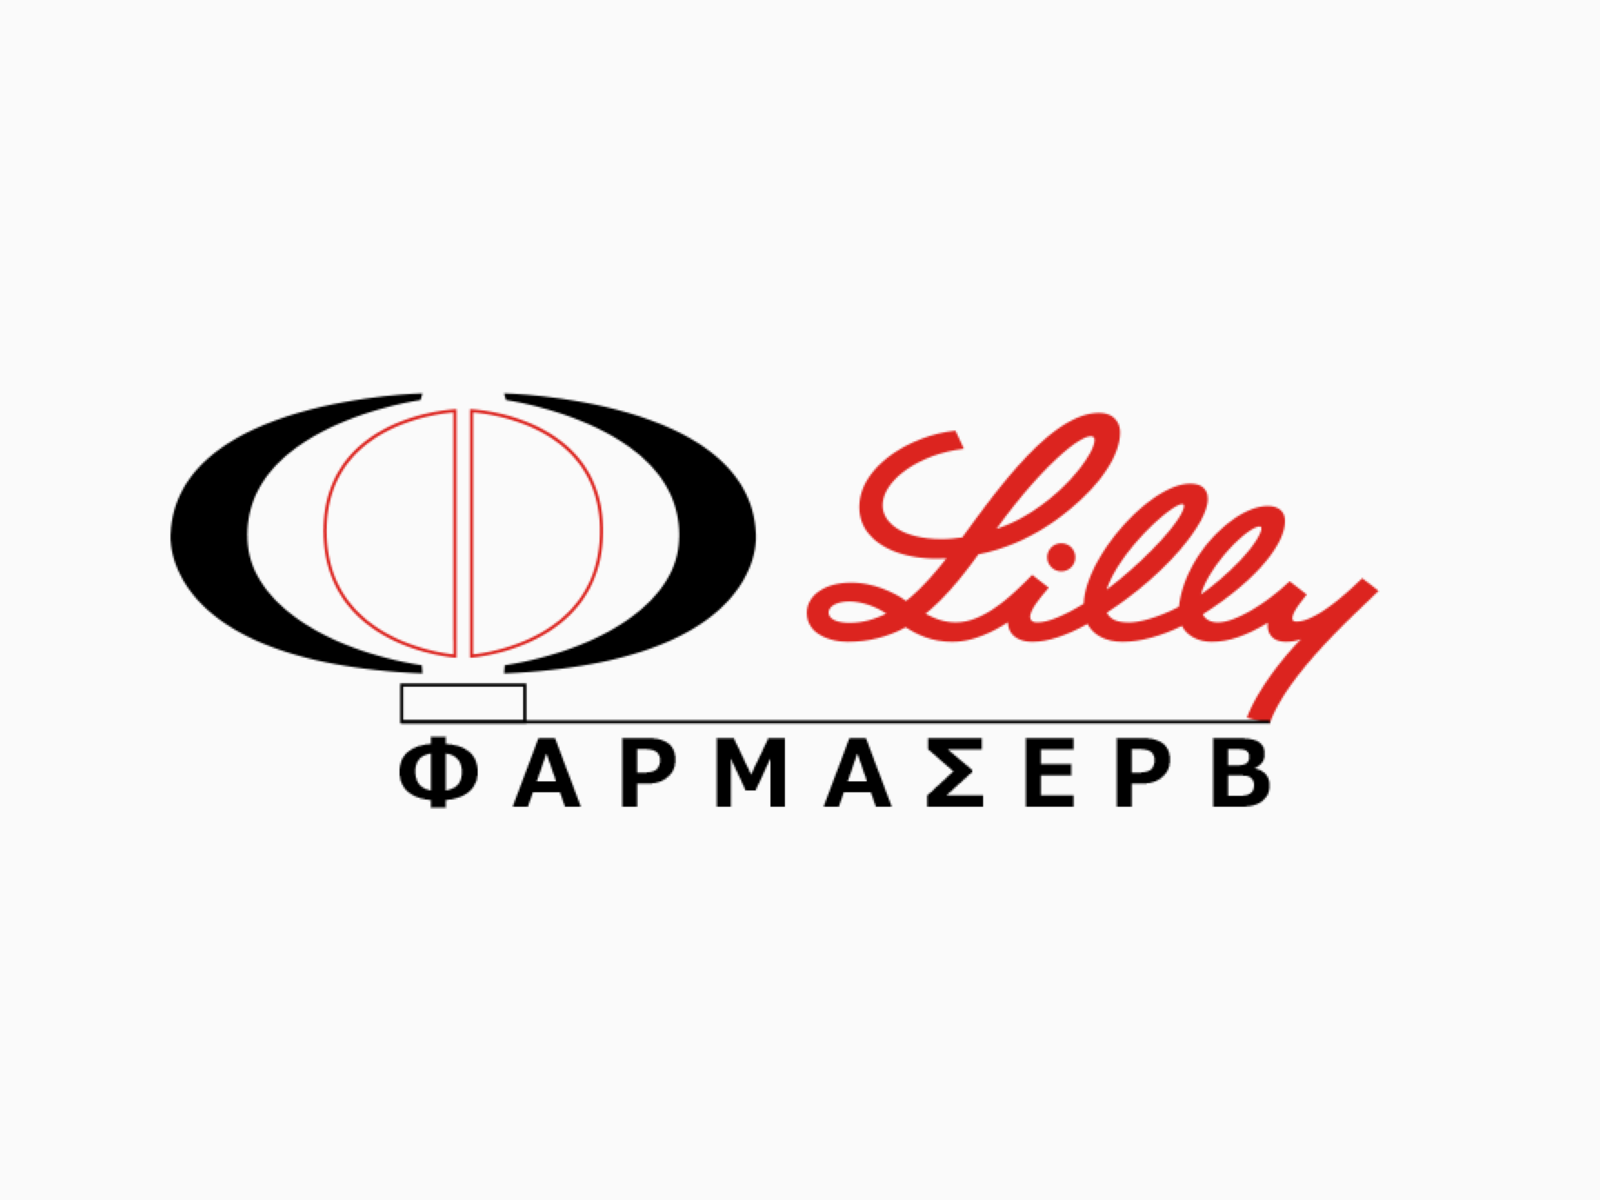 Eli Lilly : Συμφωνία Κοινής Προμήθειας με την Ευρωπαϊκή Επιτροπή για προμήθεια αντισωμάτων